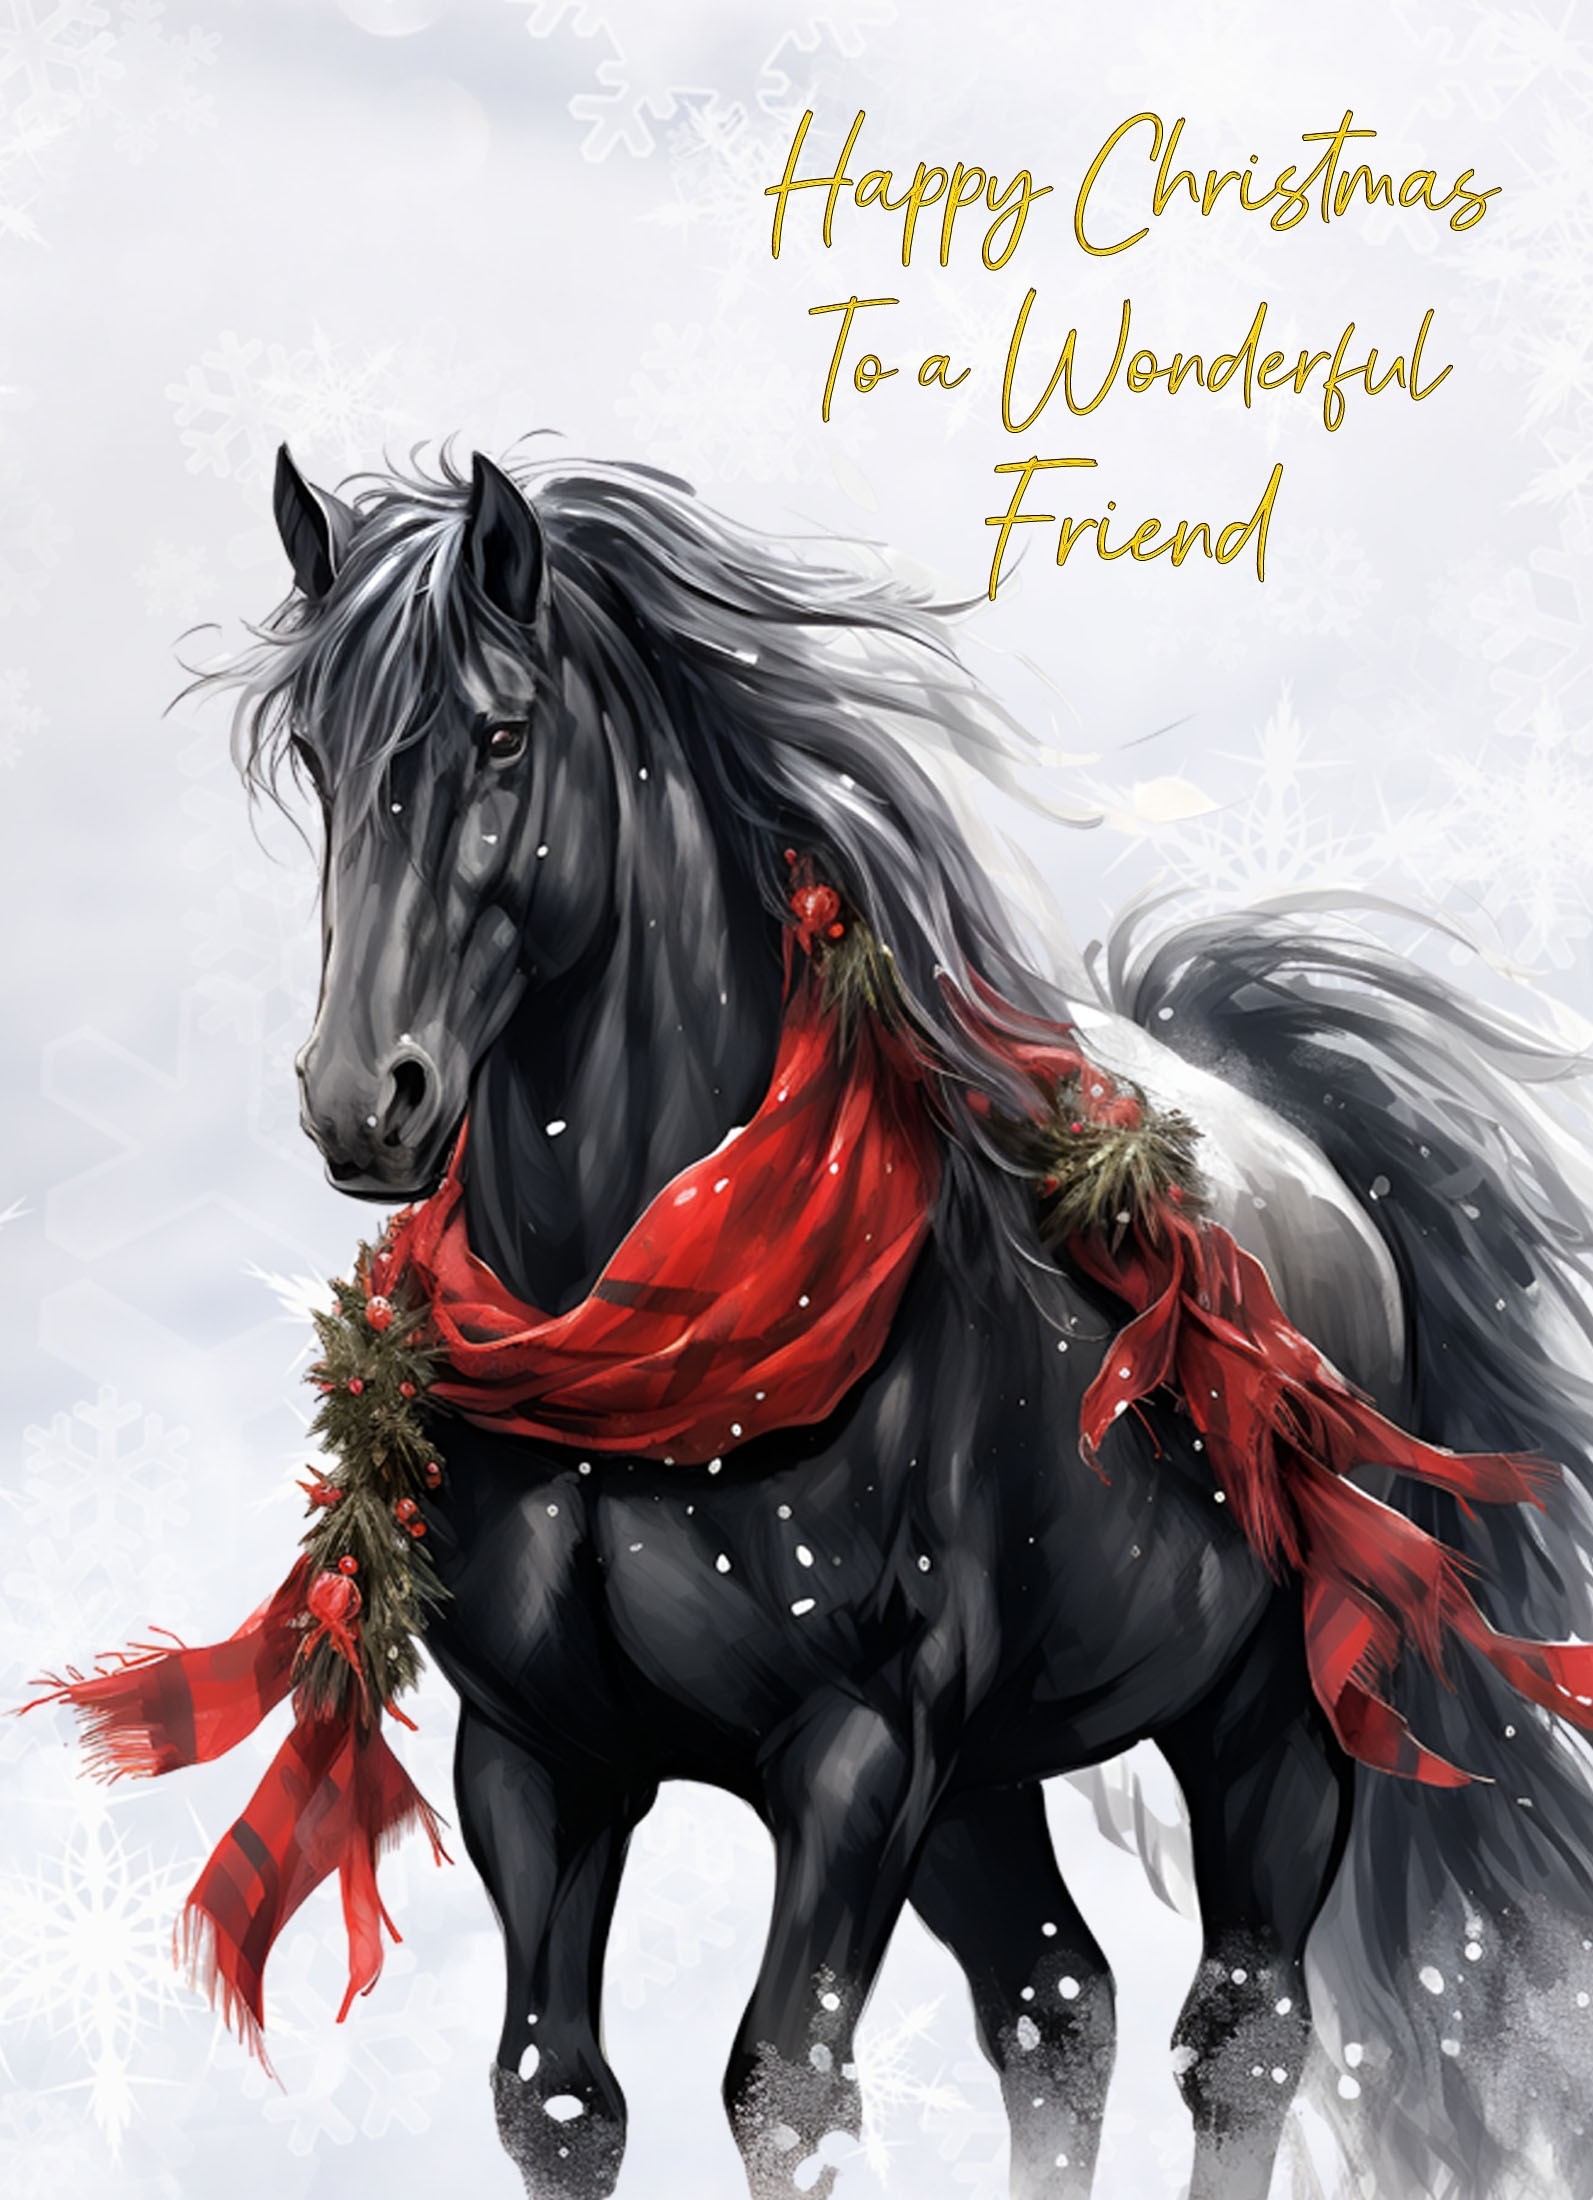 Christmas Card For Friend (Horse Art Black)